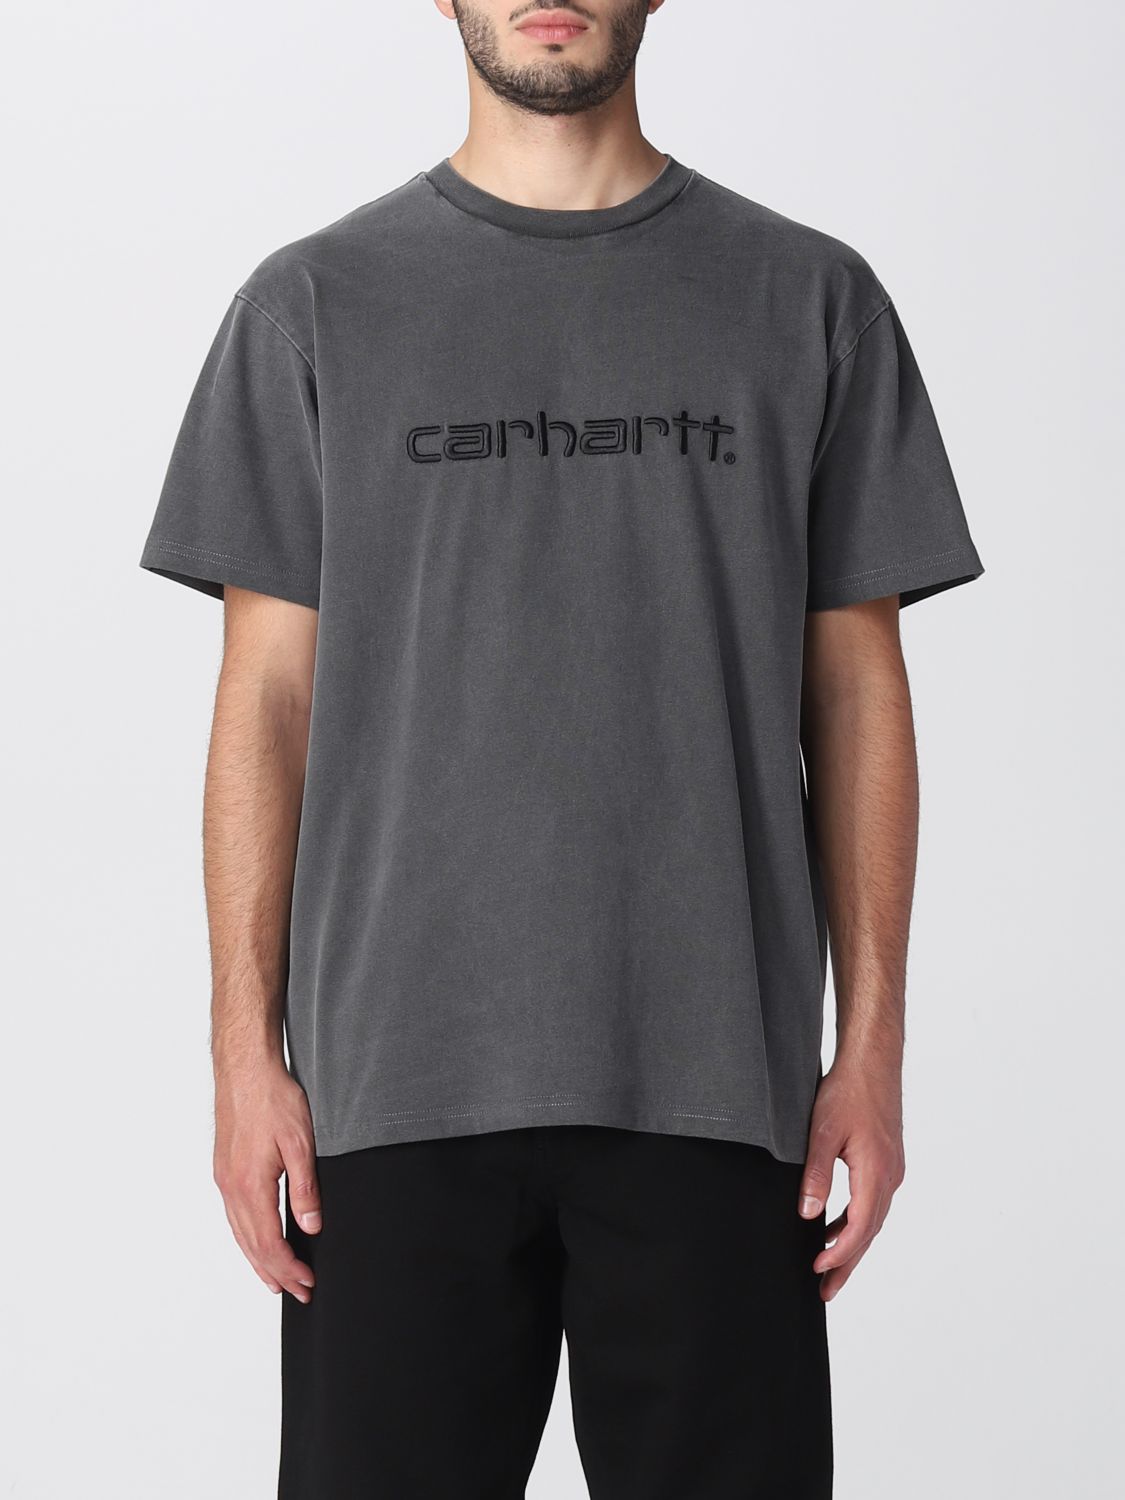 CARHARTT - Herren | online T-Shirt auf Grau Carhartt T-Shirt I030110 WIP: Wip